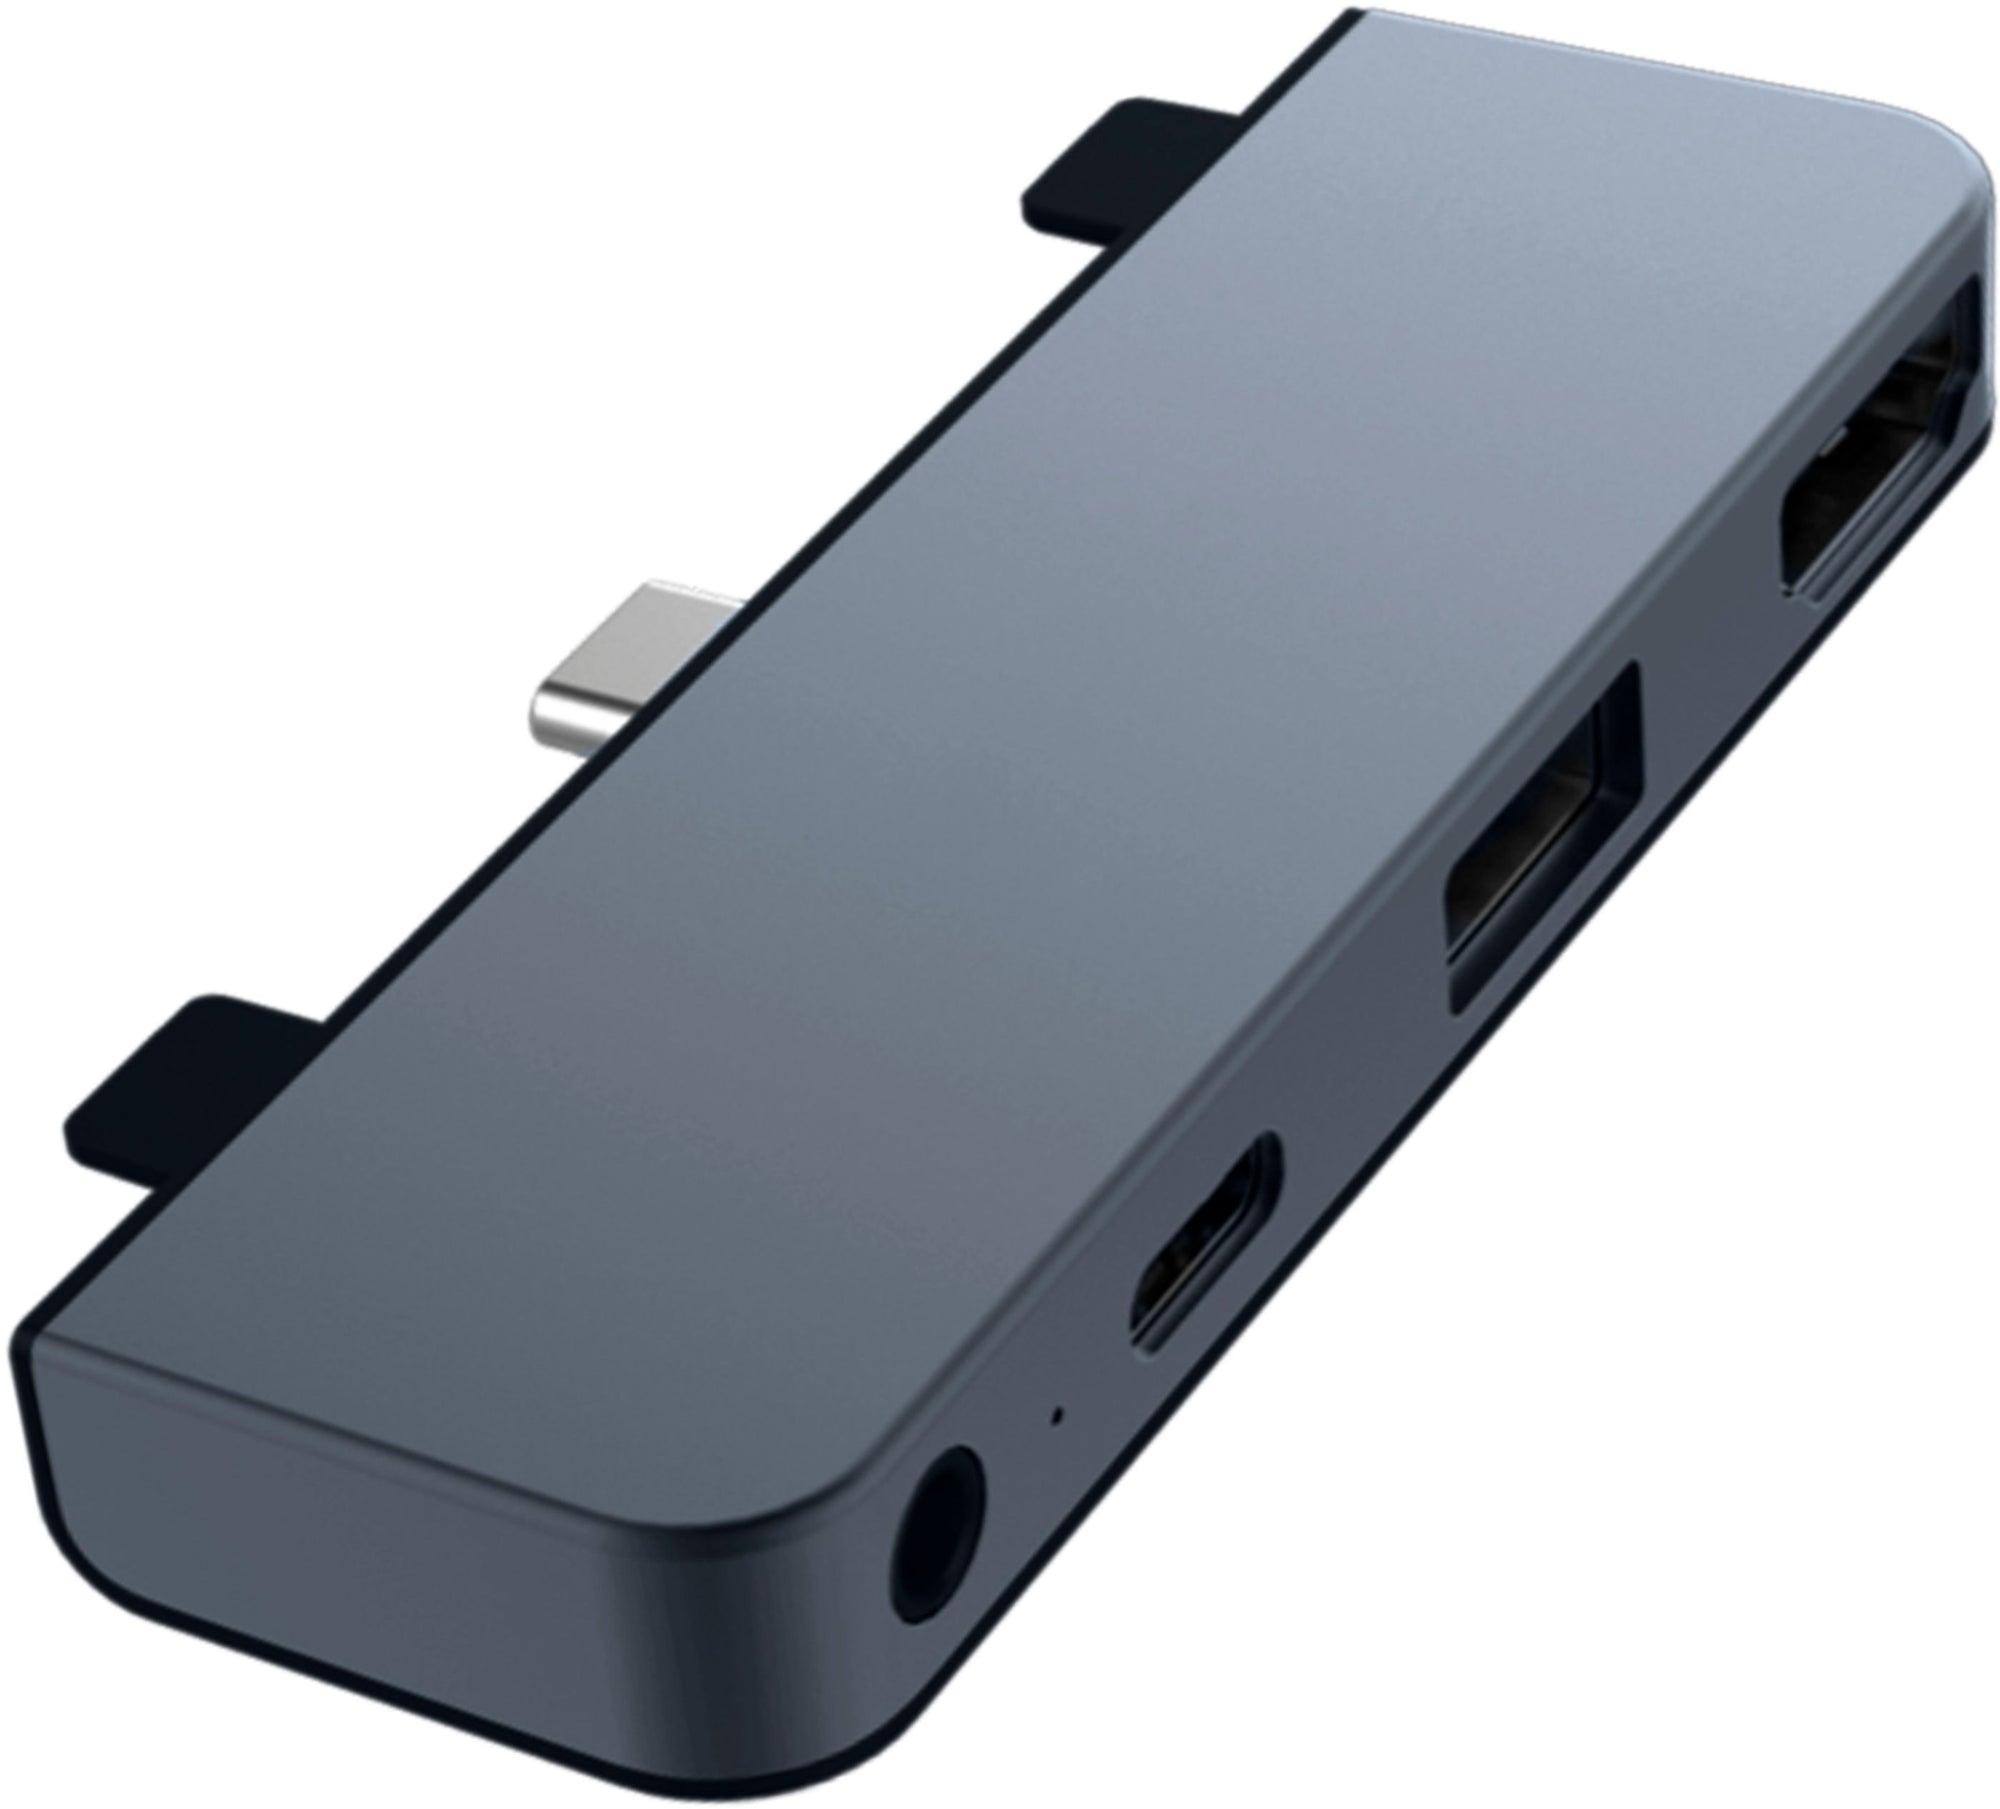 HyperDrive - HD319E-GRAY 4 Port USB C Hub - USB C Docking Station for Apple iPad Pro - Space Gray